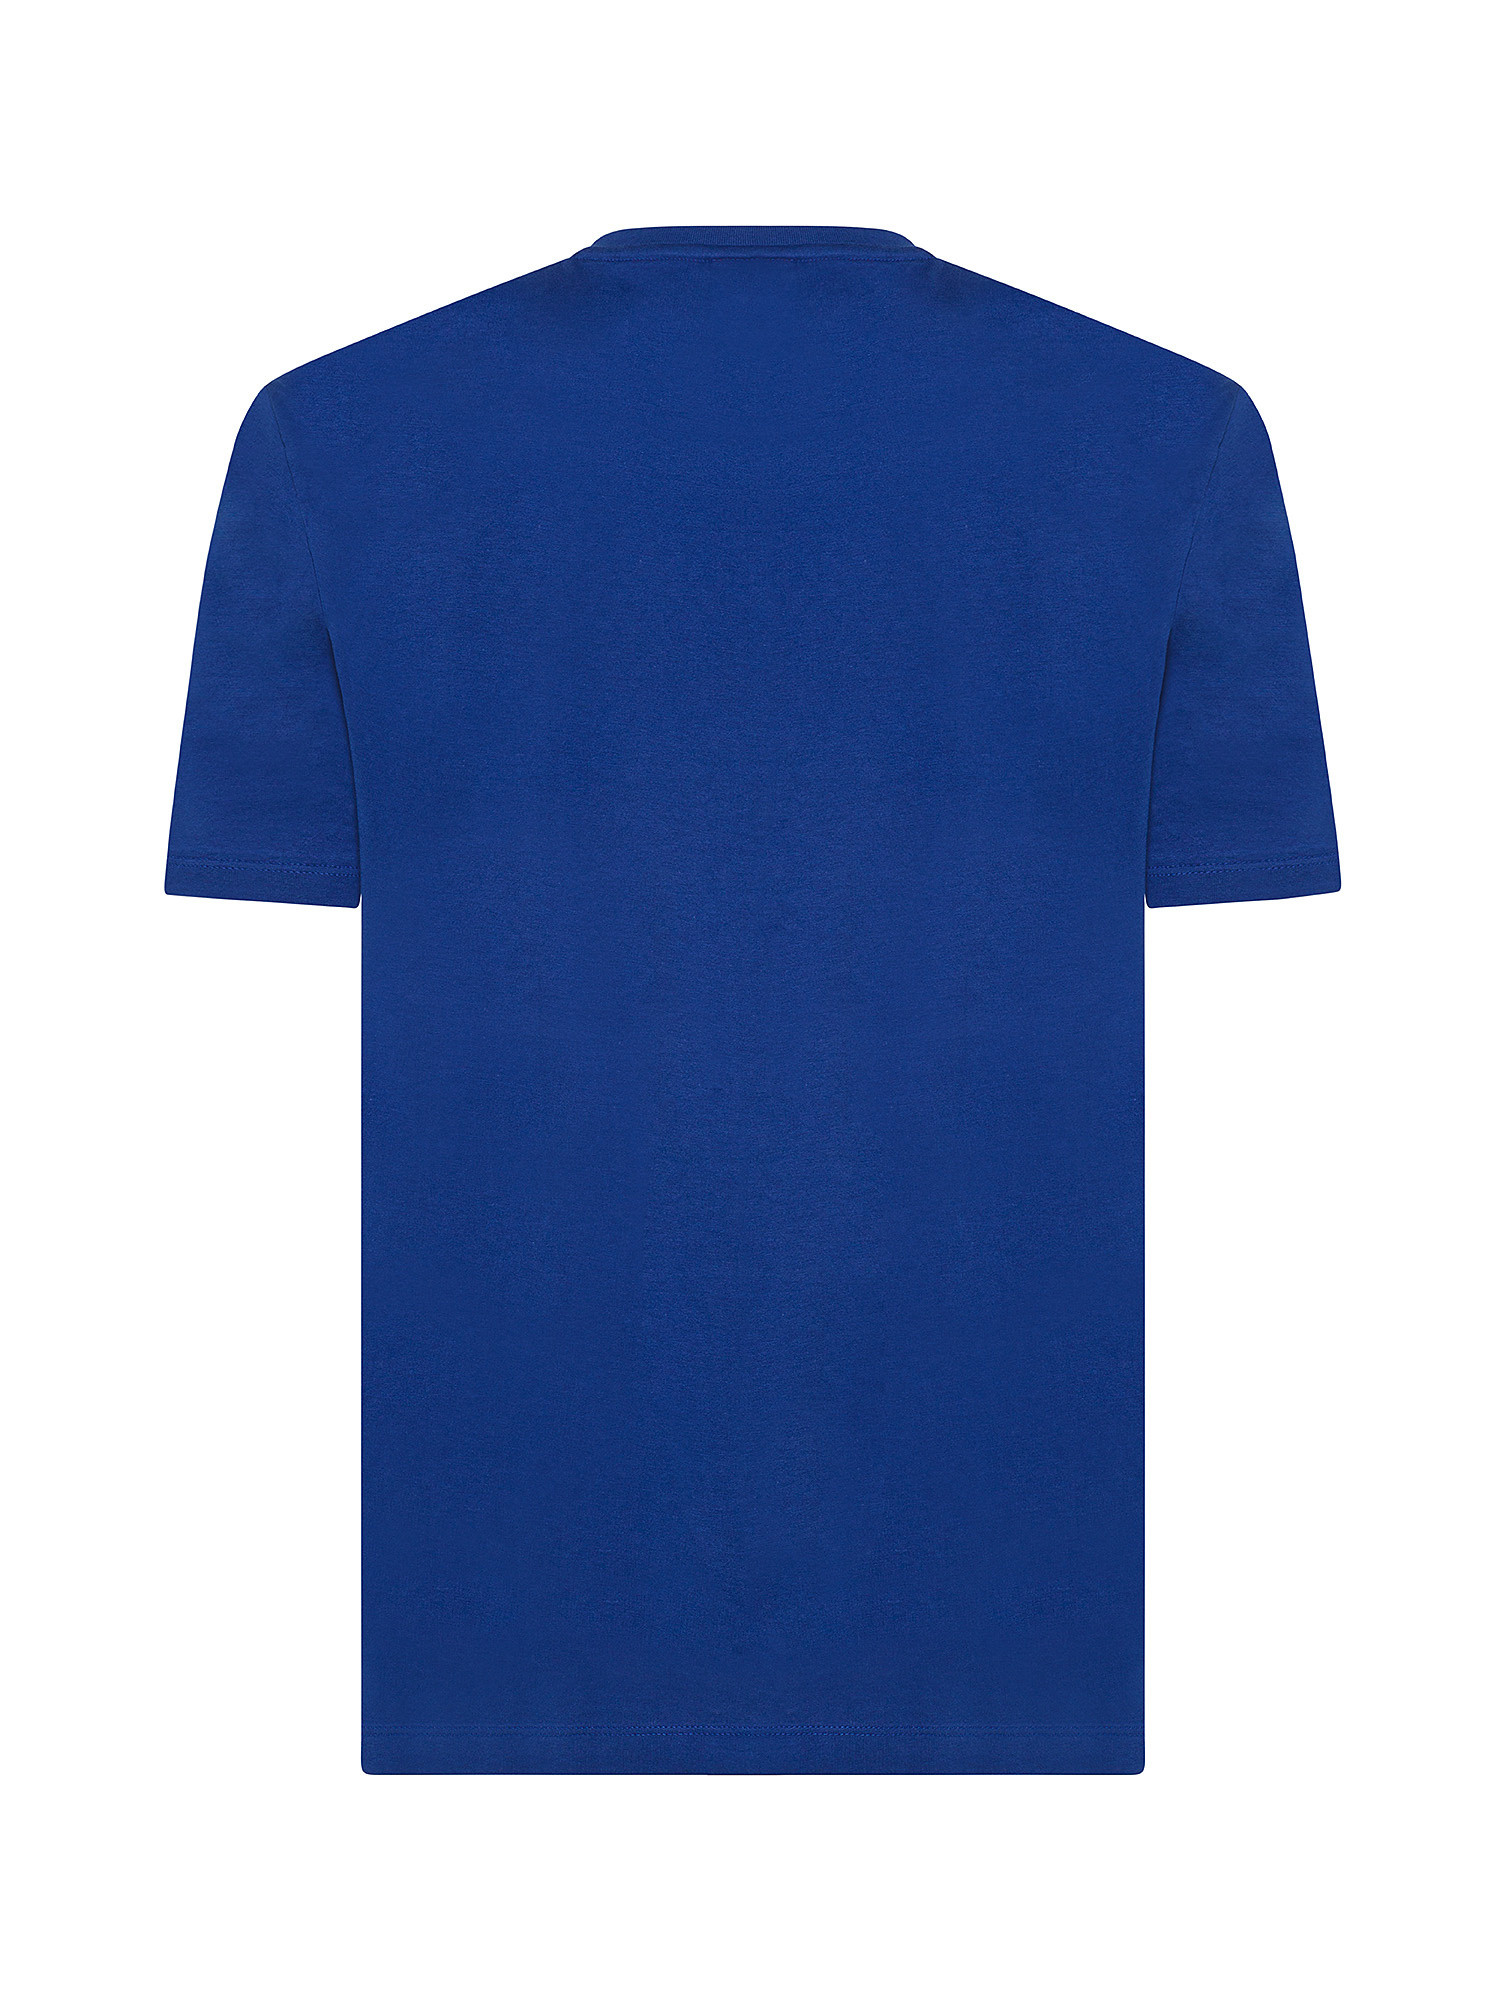 Hugo - T-shirt con logo in cotone, Blu royal, large image number 1